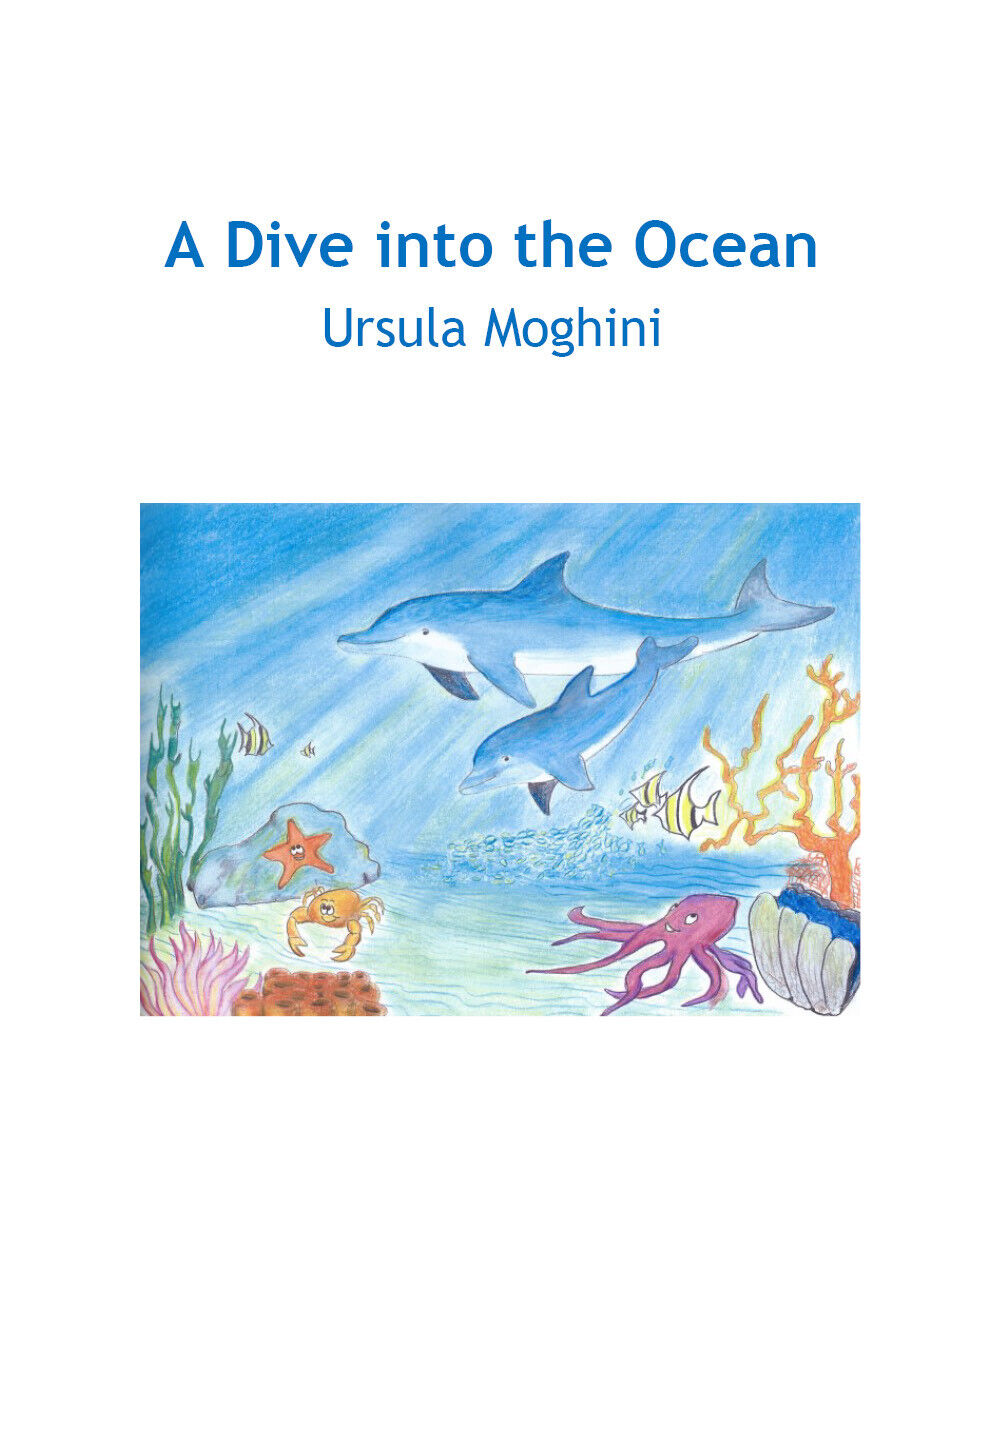 A Dive into the Ocean - Ursula Moghini,  2019,  Youcanprint